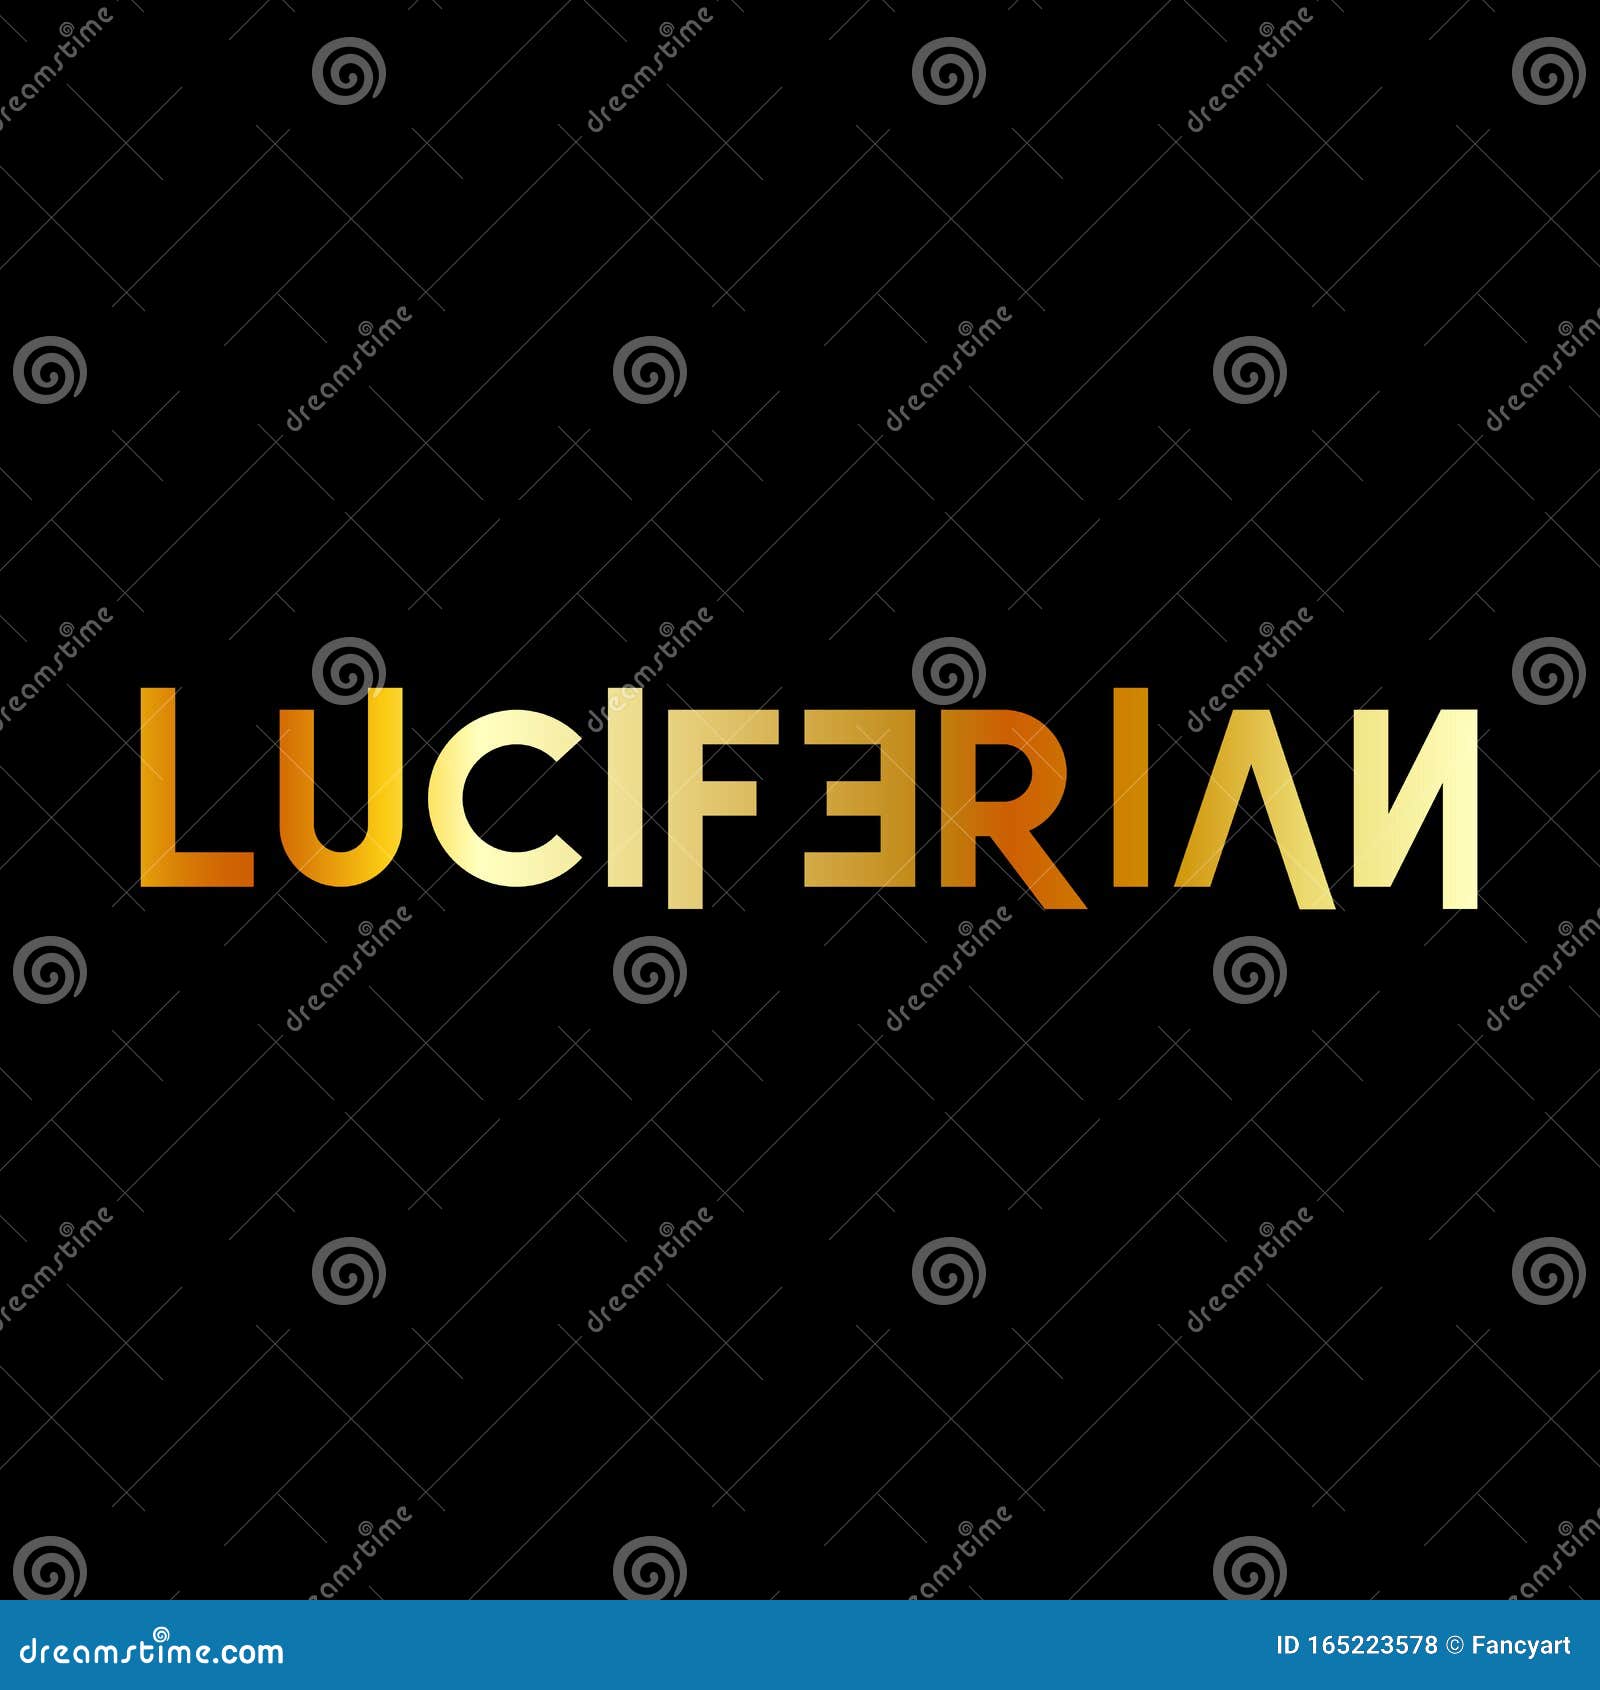 luciferian- a  of satanic god lucifer in gold